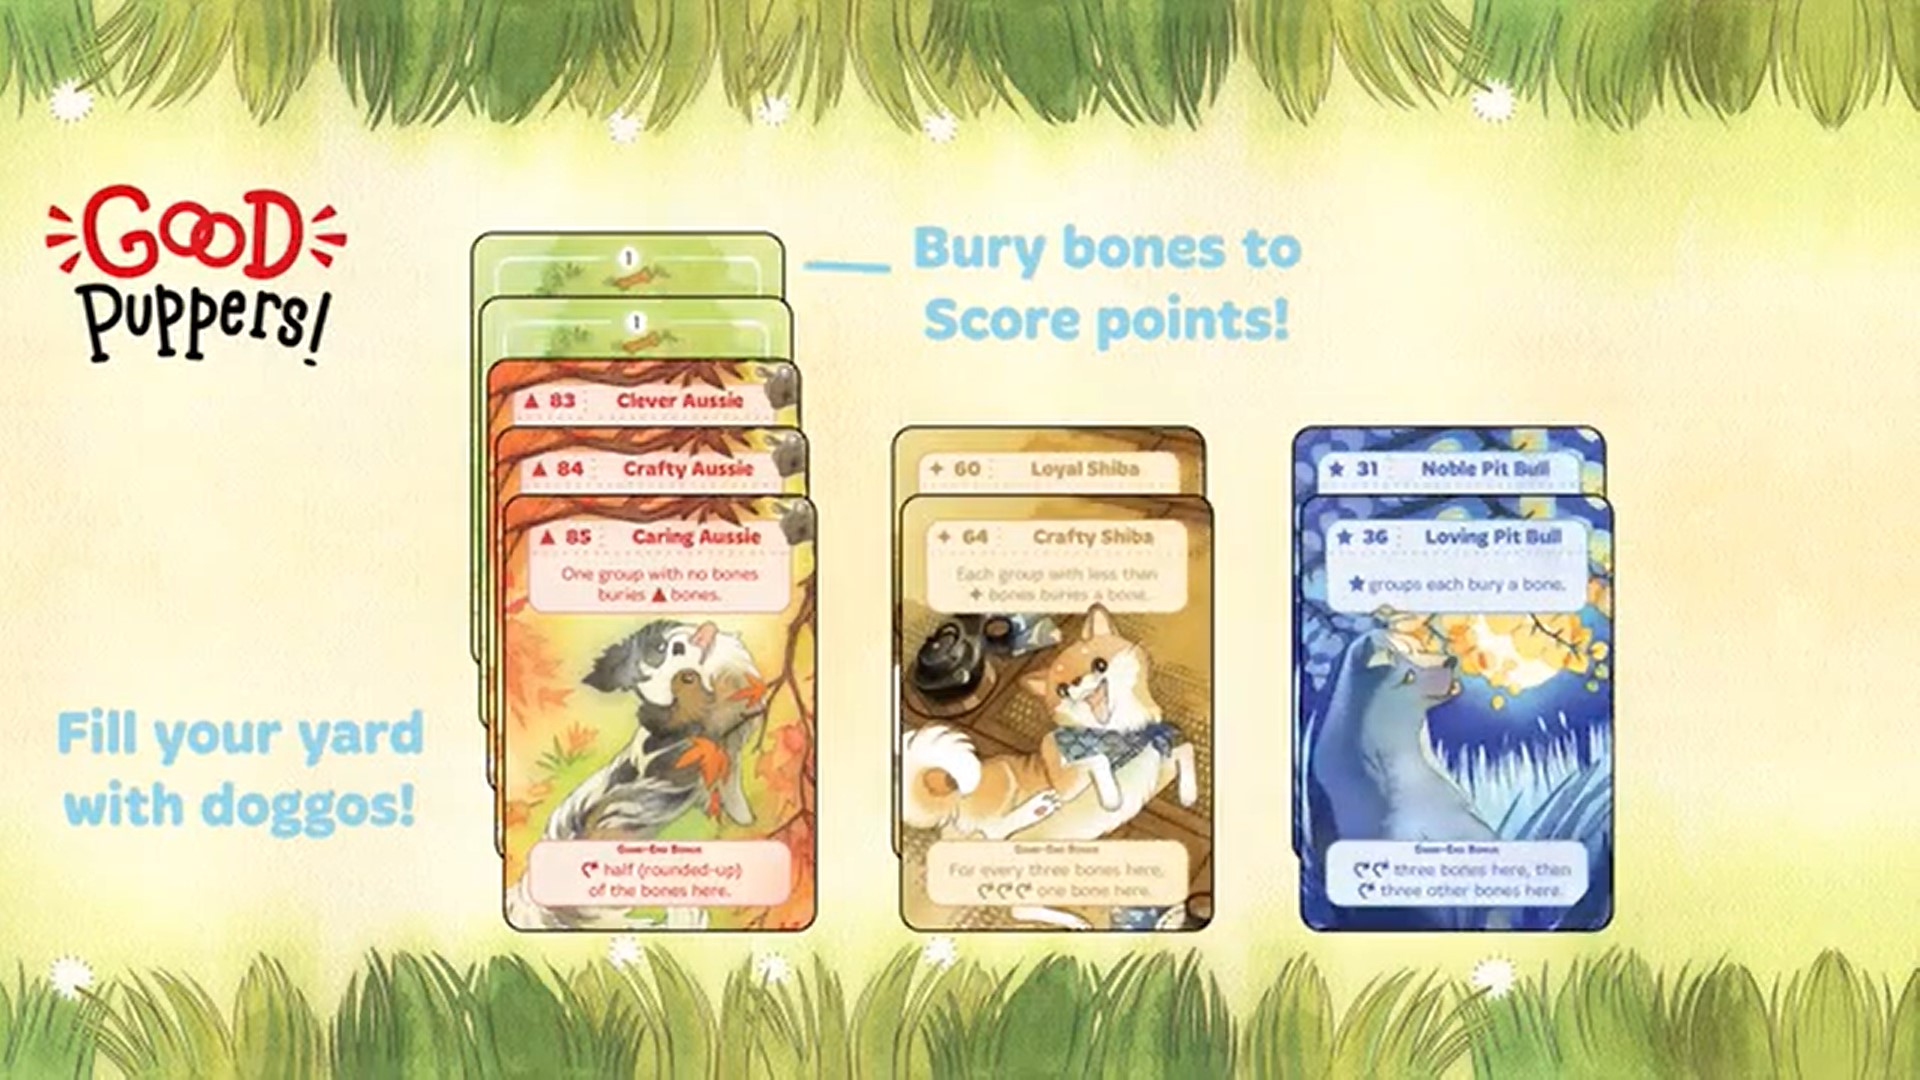 Juicy bone. New Card game.